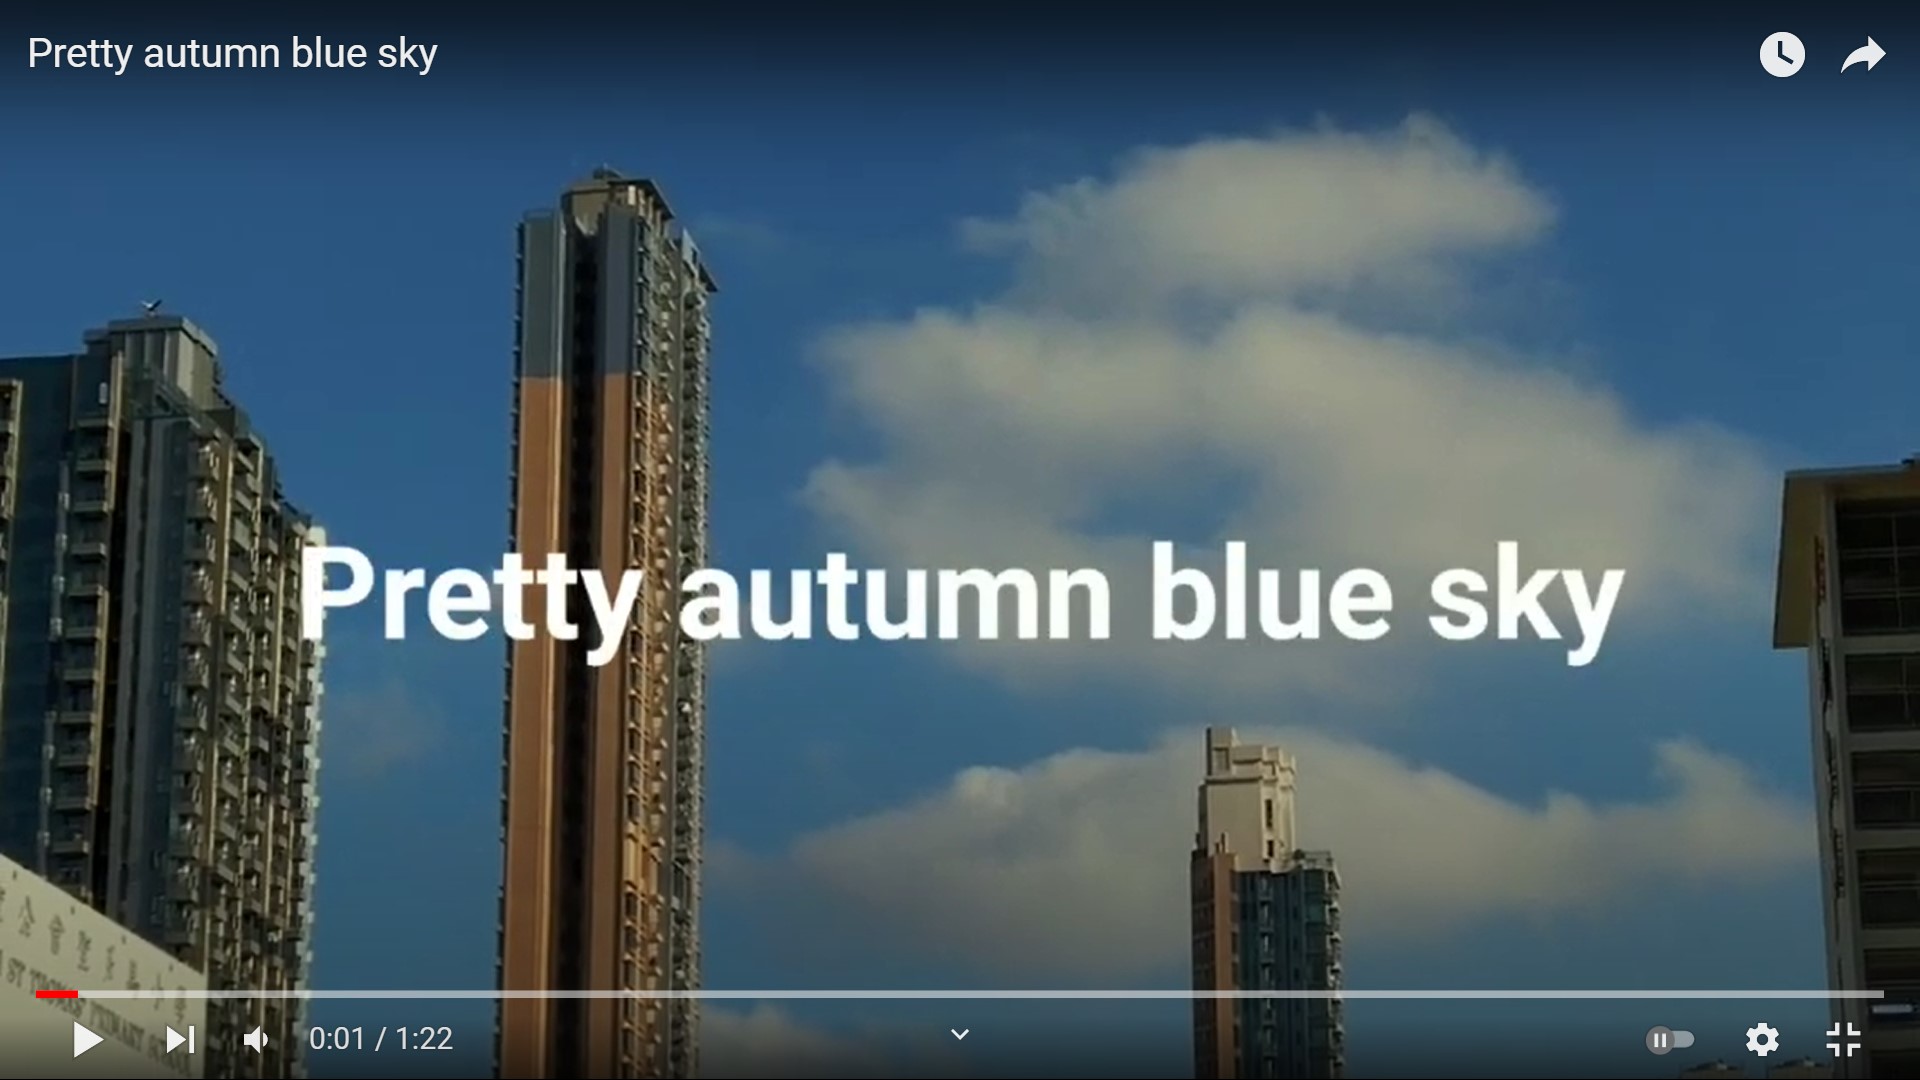 Frank’s “Pretty autumn blue sky” snapshots video